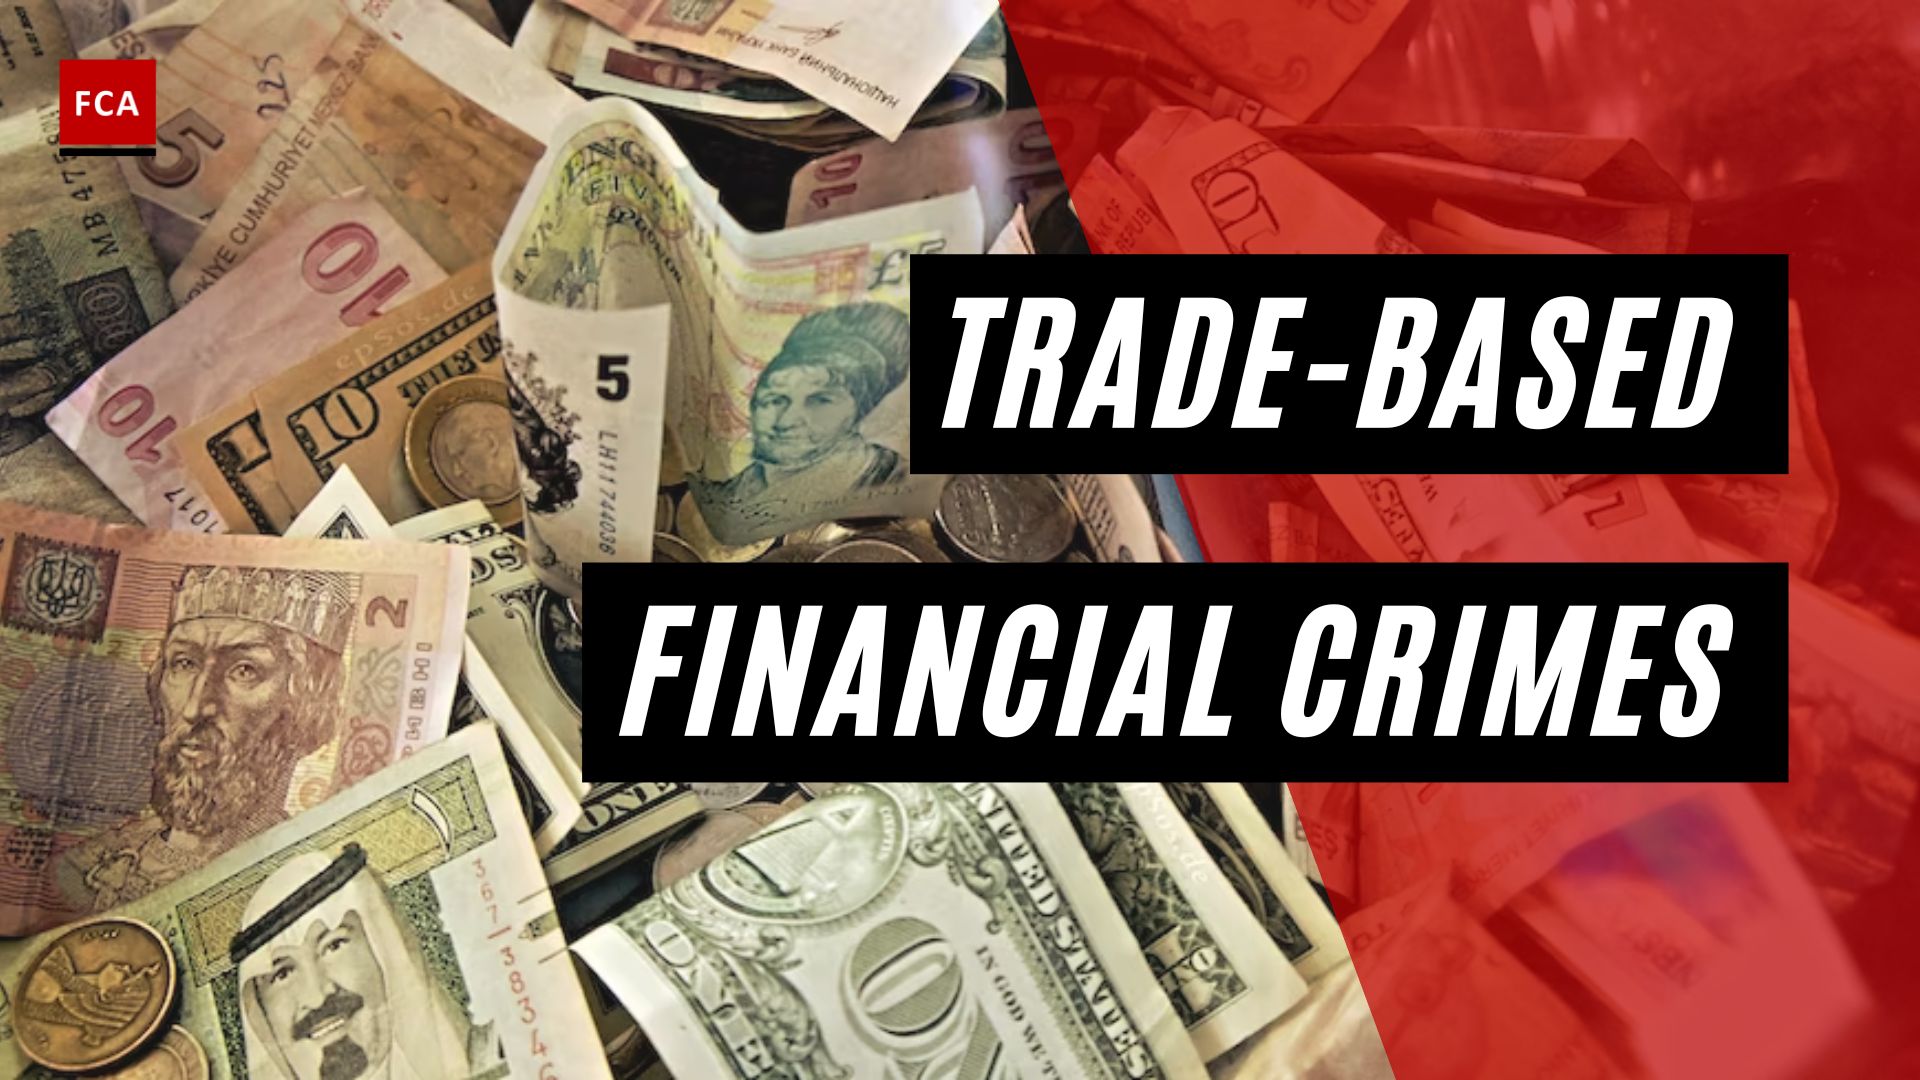 Trade-Based Financial Crimes